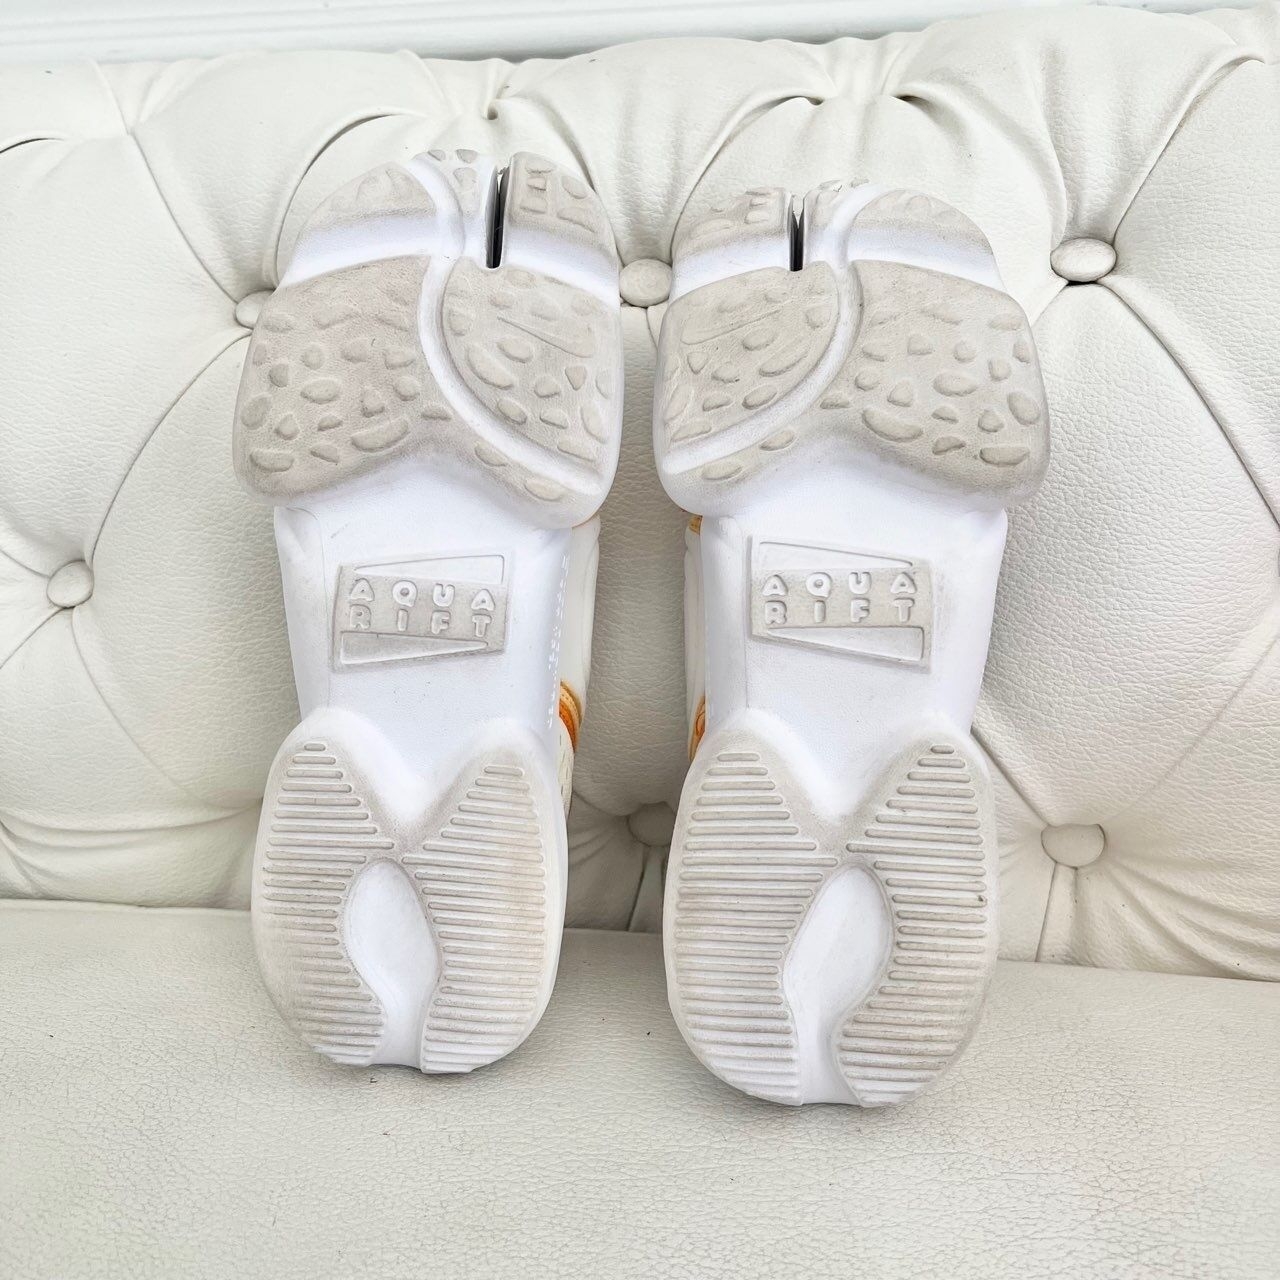 Nike Aqua Rift "White Cerulean Solar Flare" Sneakers